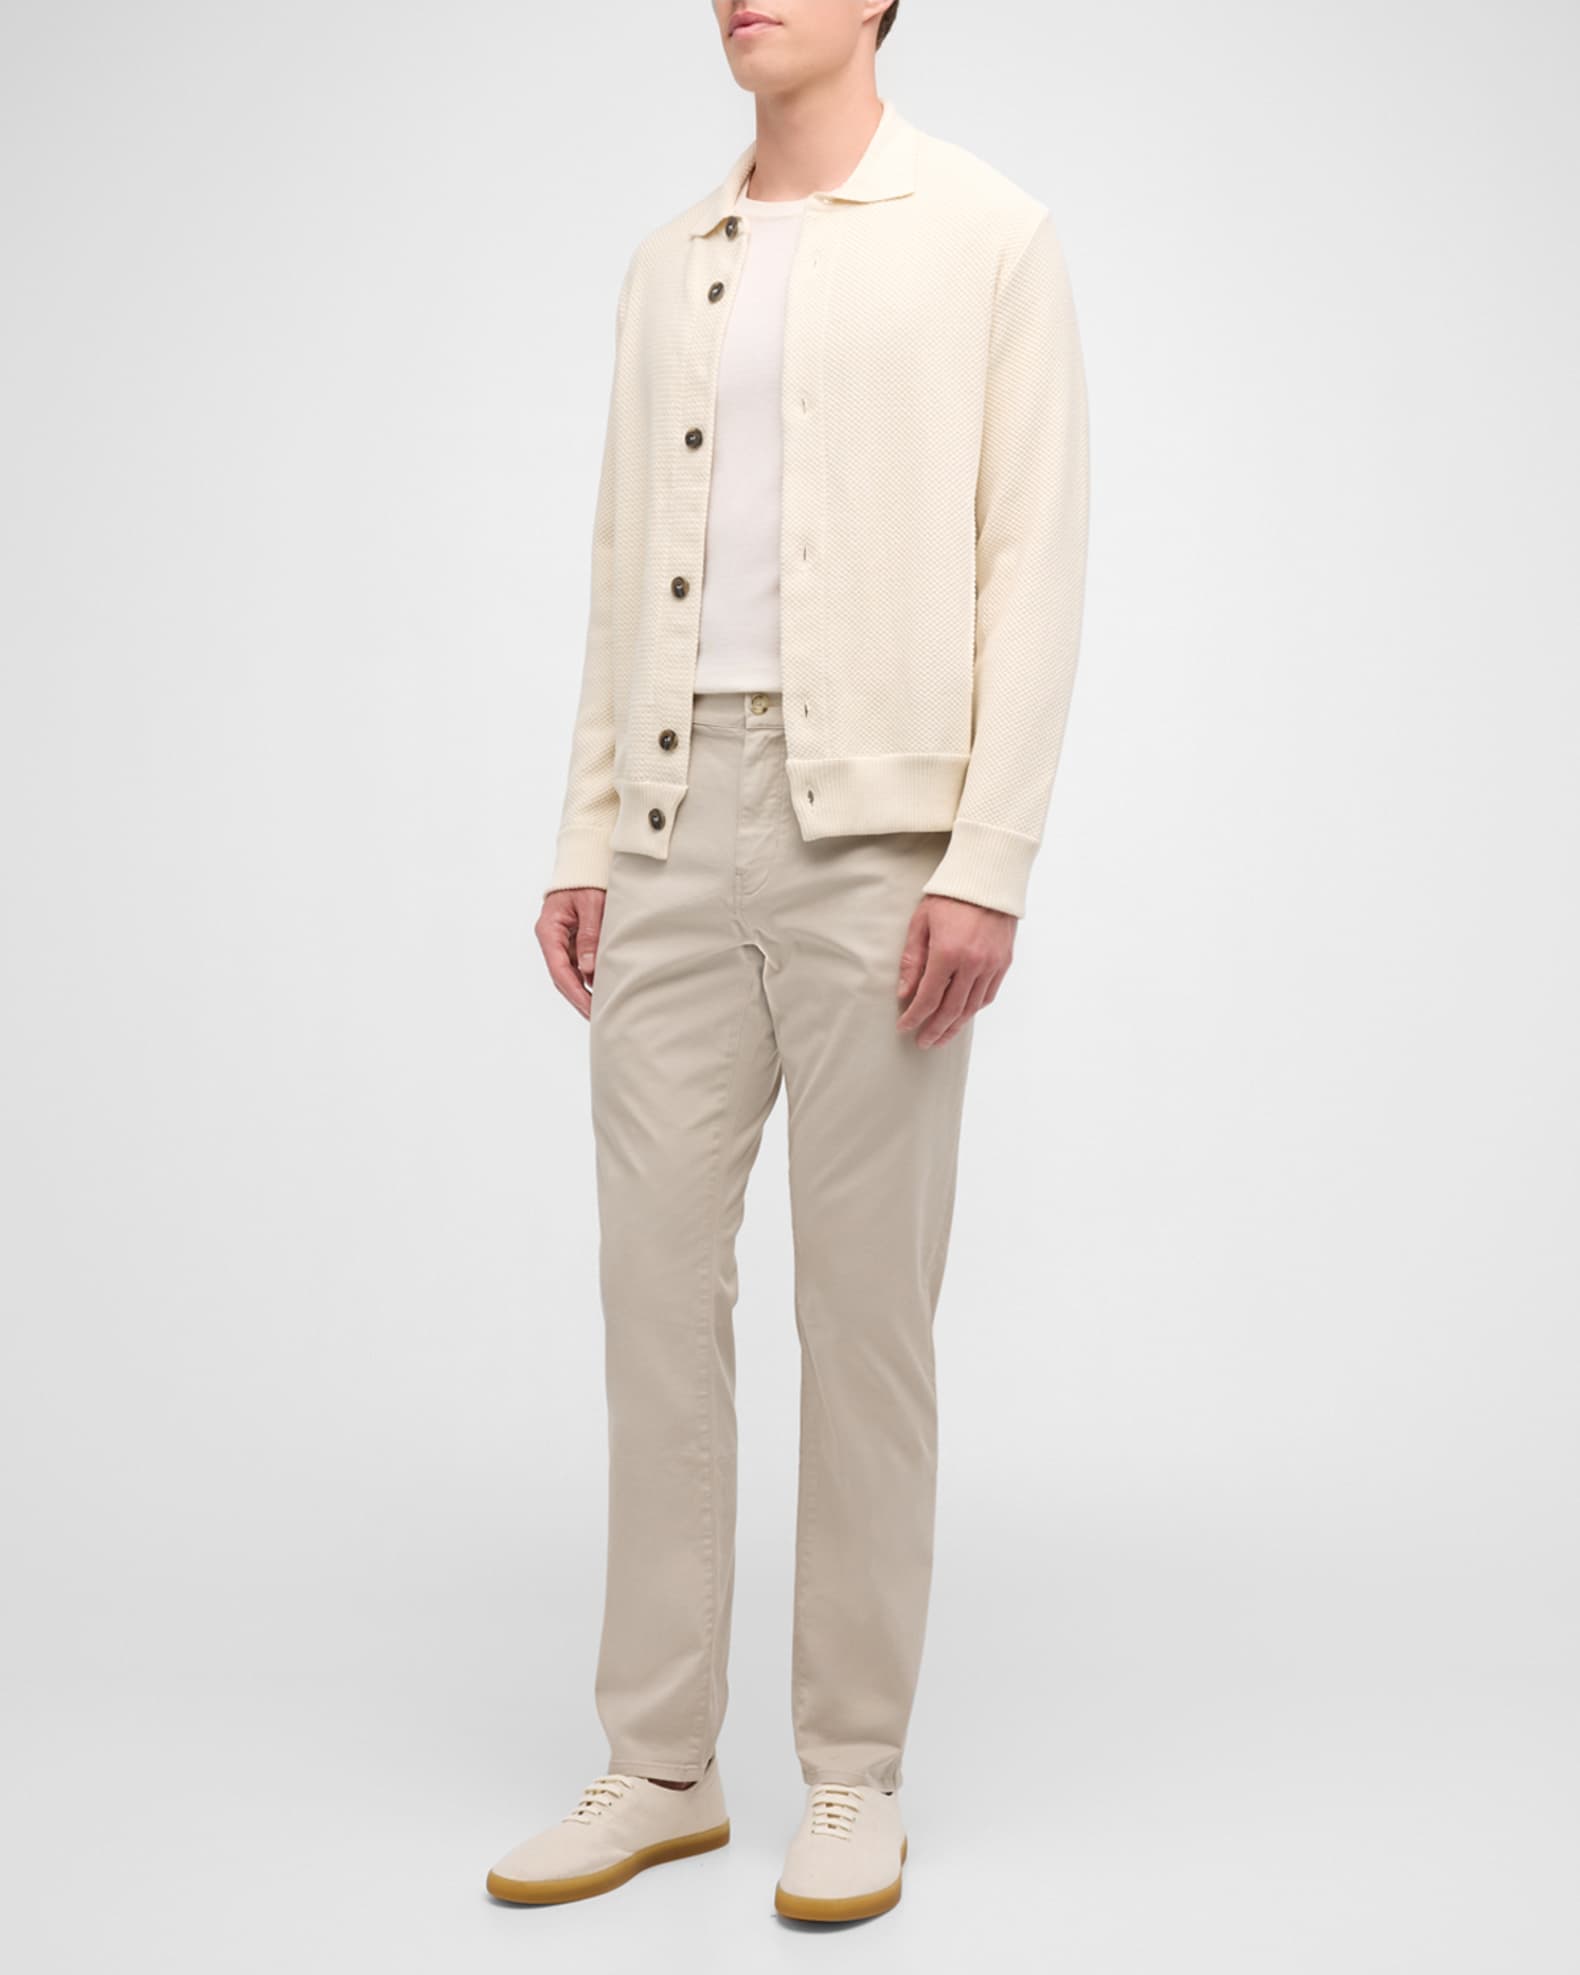 Theory Wool Blend 5 Pocket Pants Gray, $245, Neiman Marcus